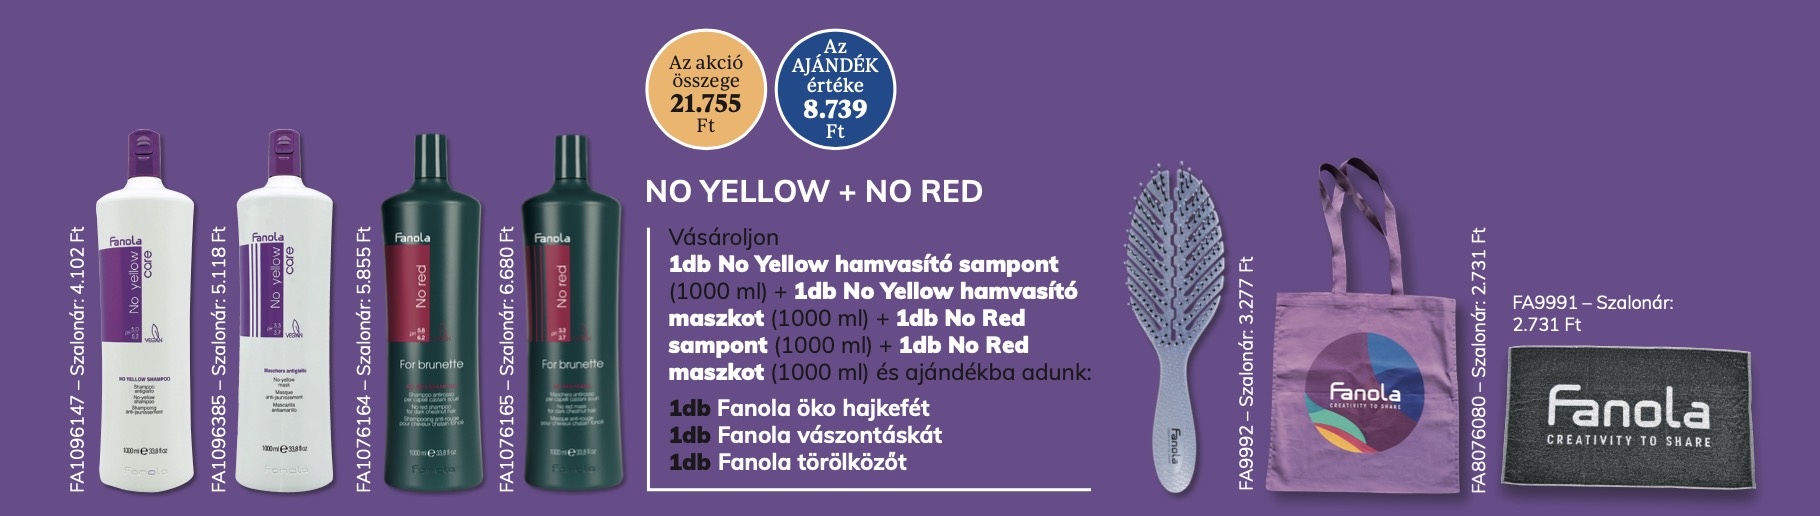 FANOLA NO YELLOW + NO RED Shampoo & Mask 4+3 AKCIÓ